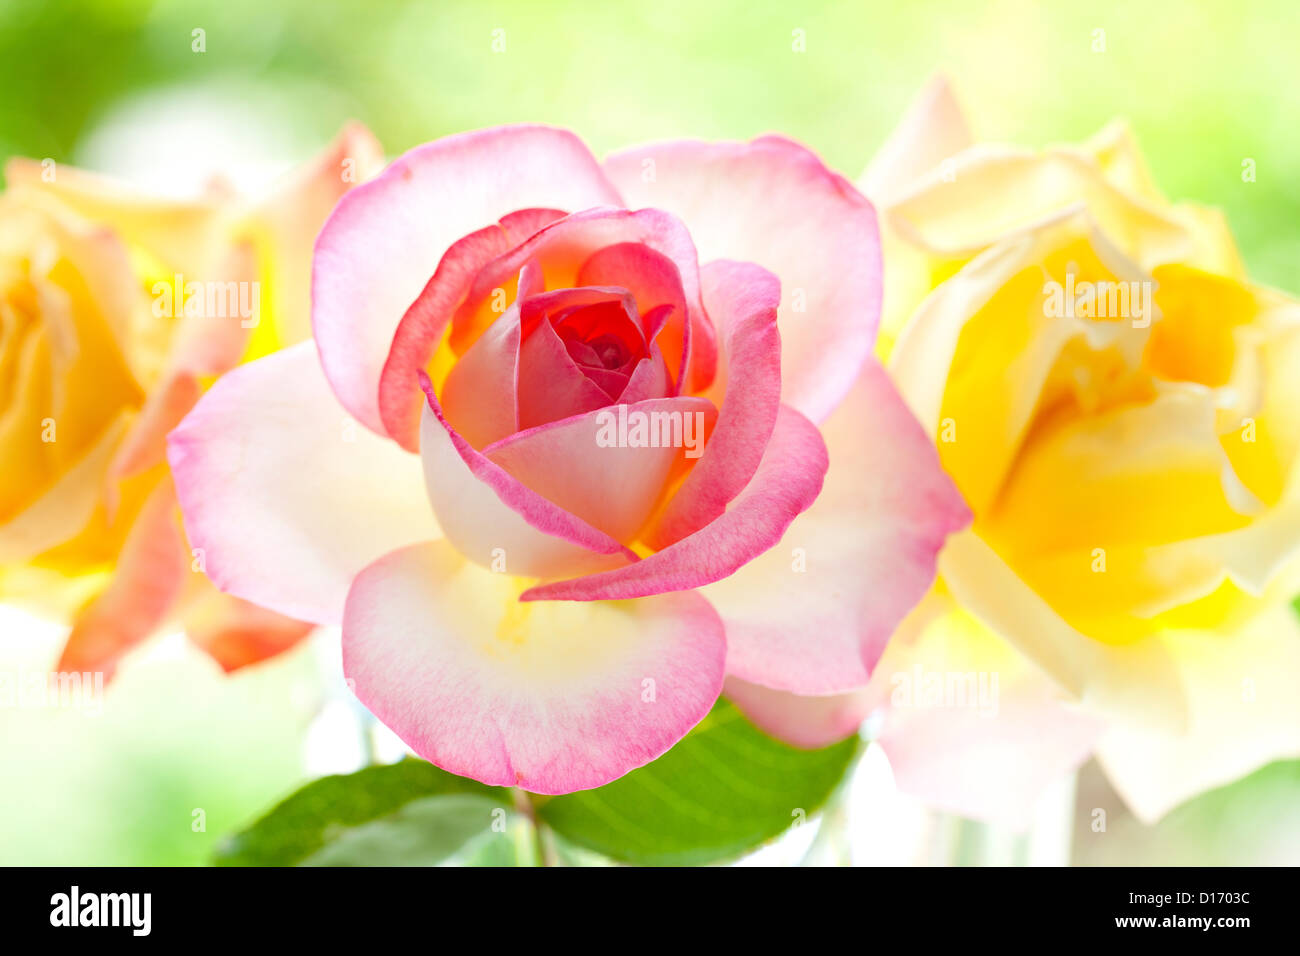 Miramare and Princess De Monaco rose flowers Stock Photo